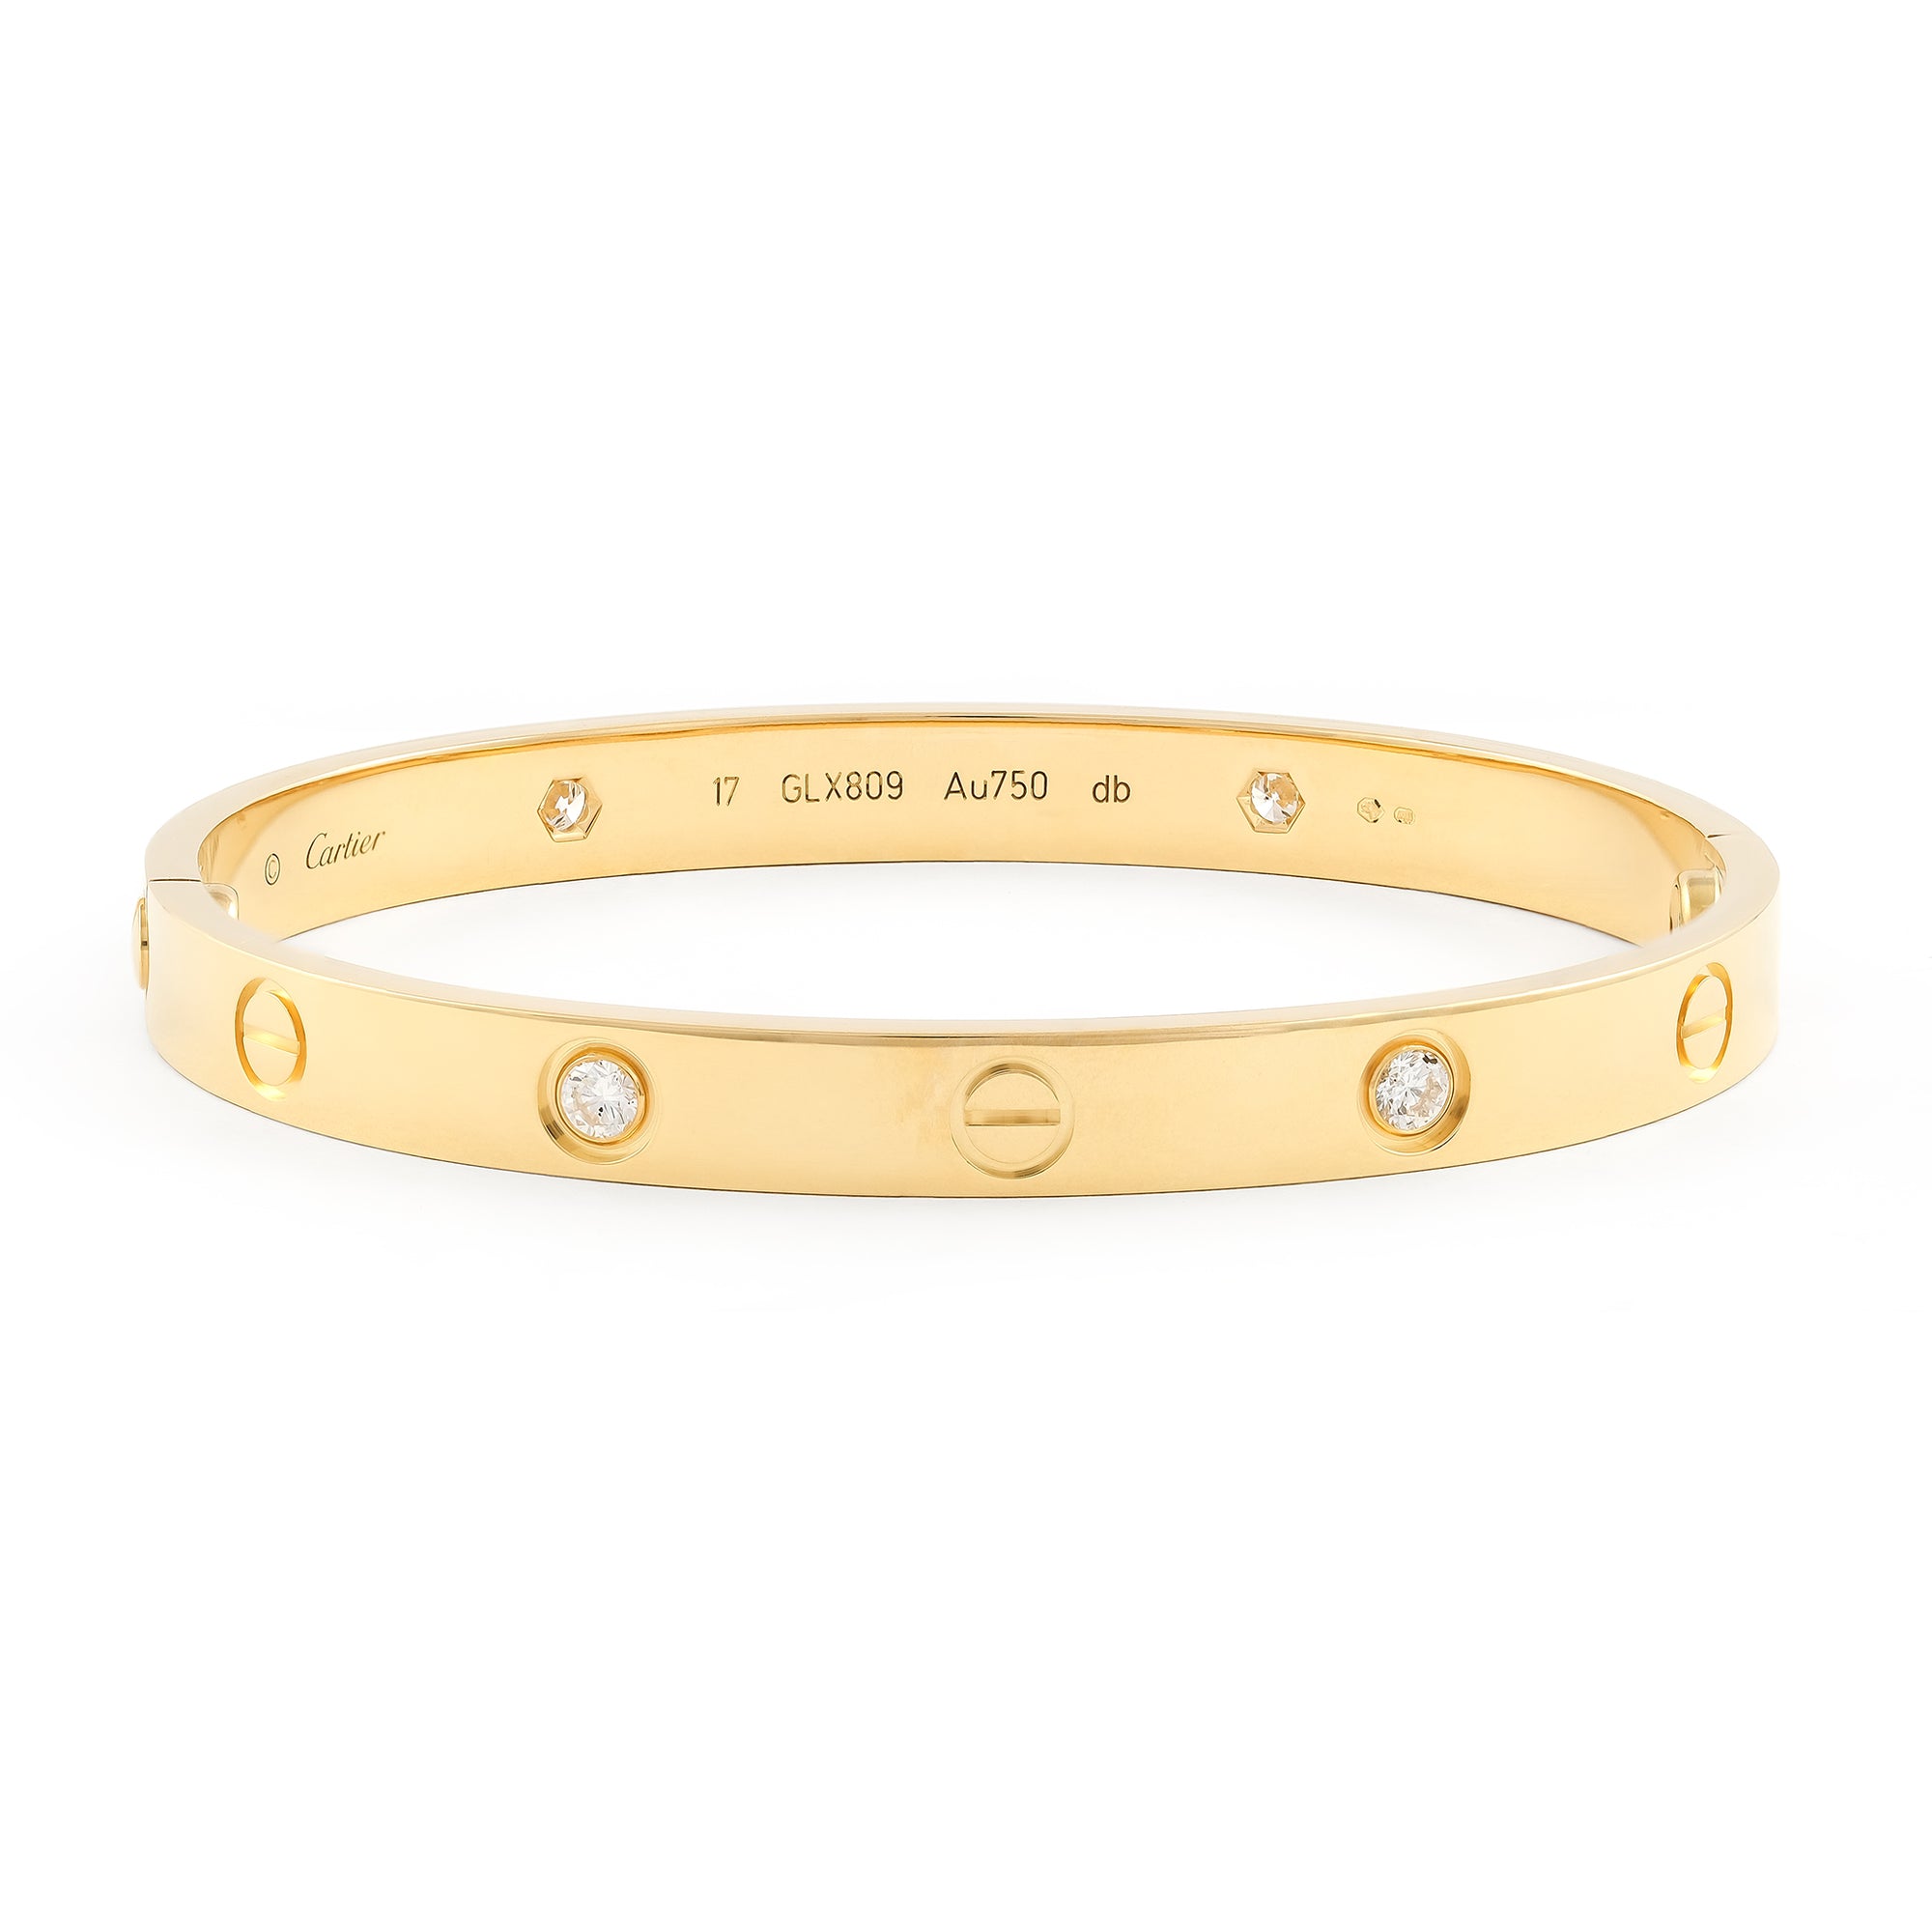 CRB6027100  LOVE bracelet  Yellow gold  Cartier